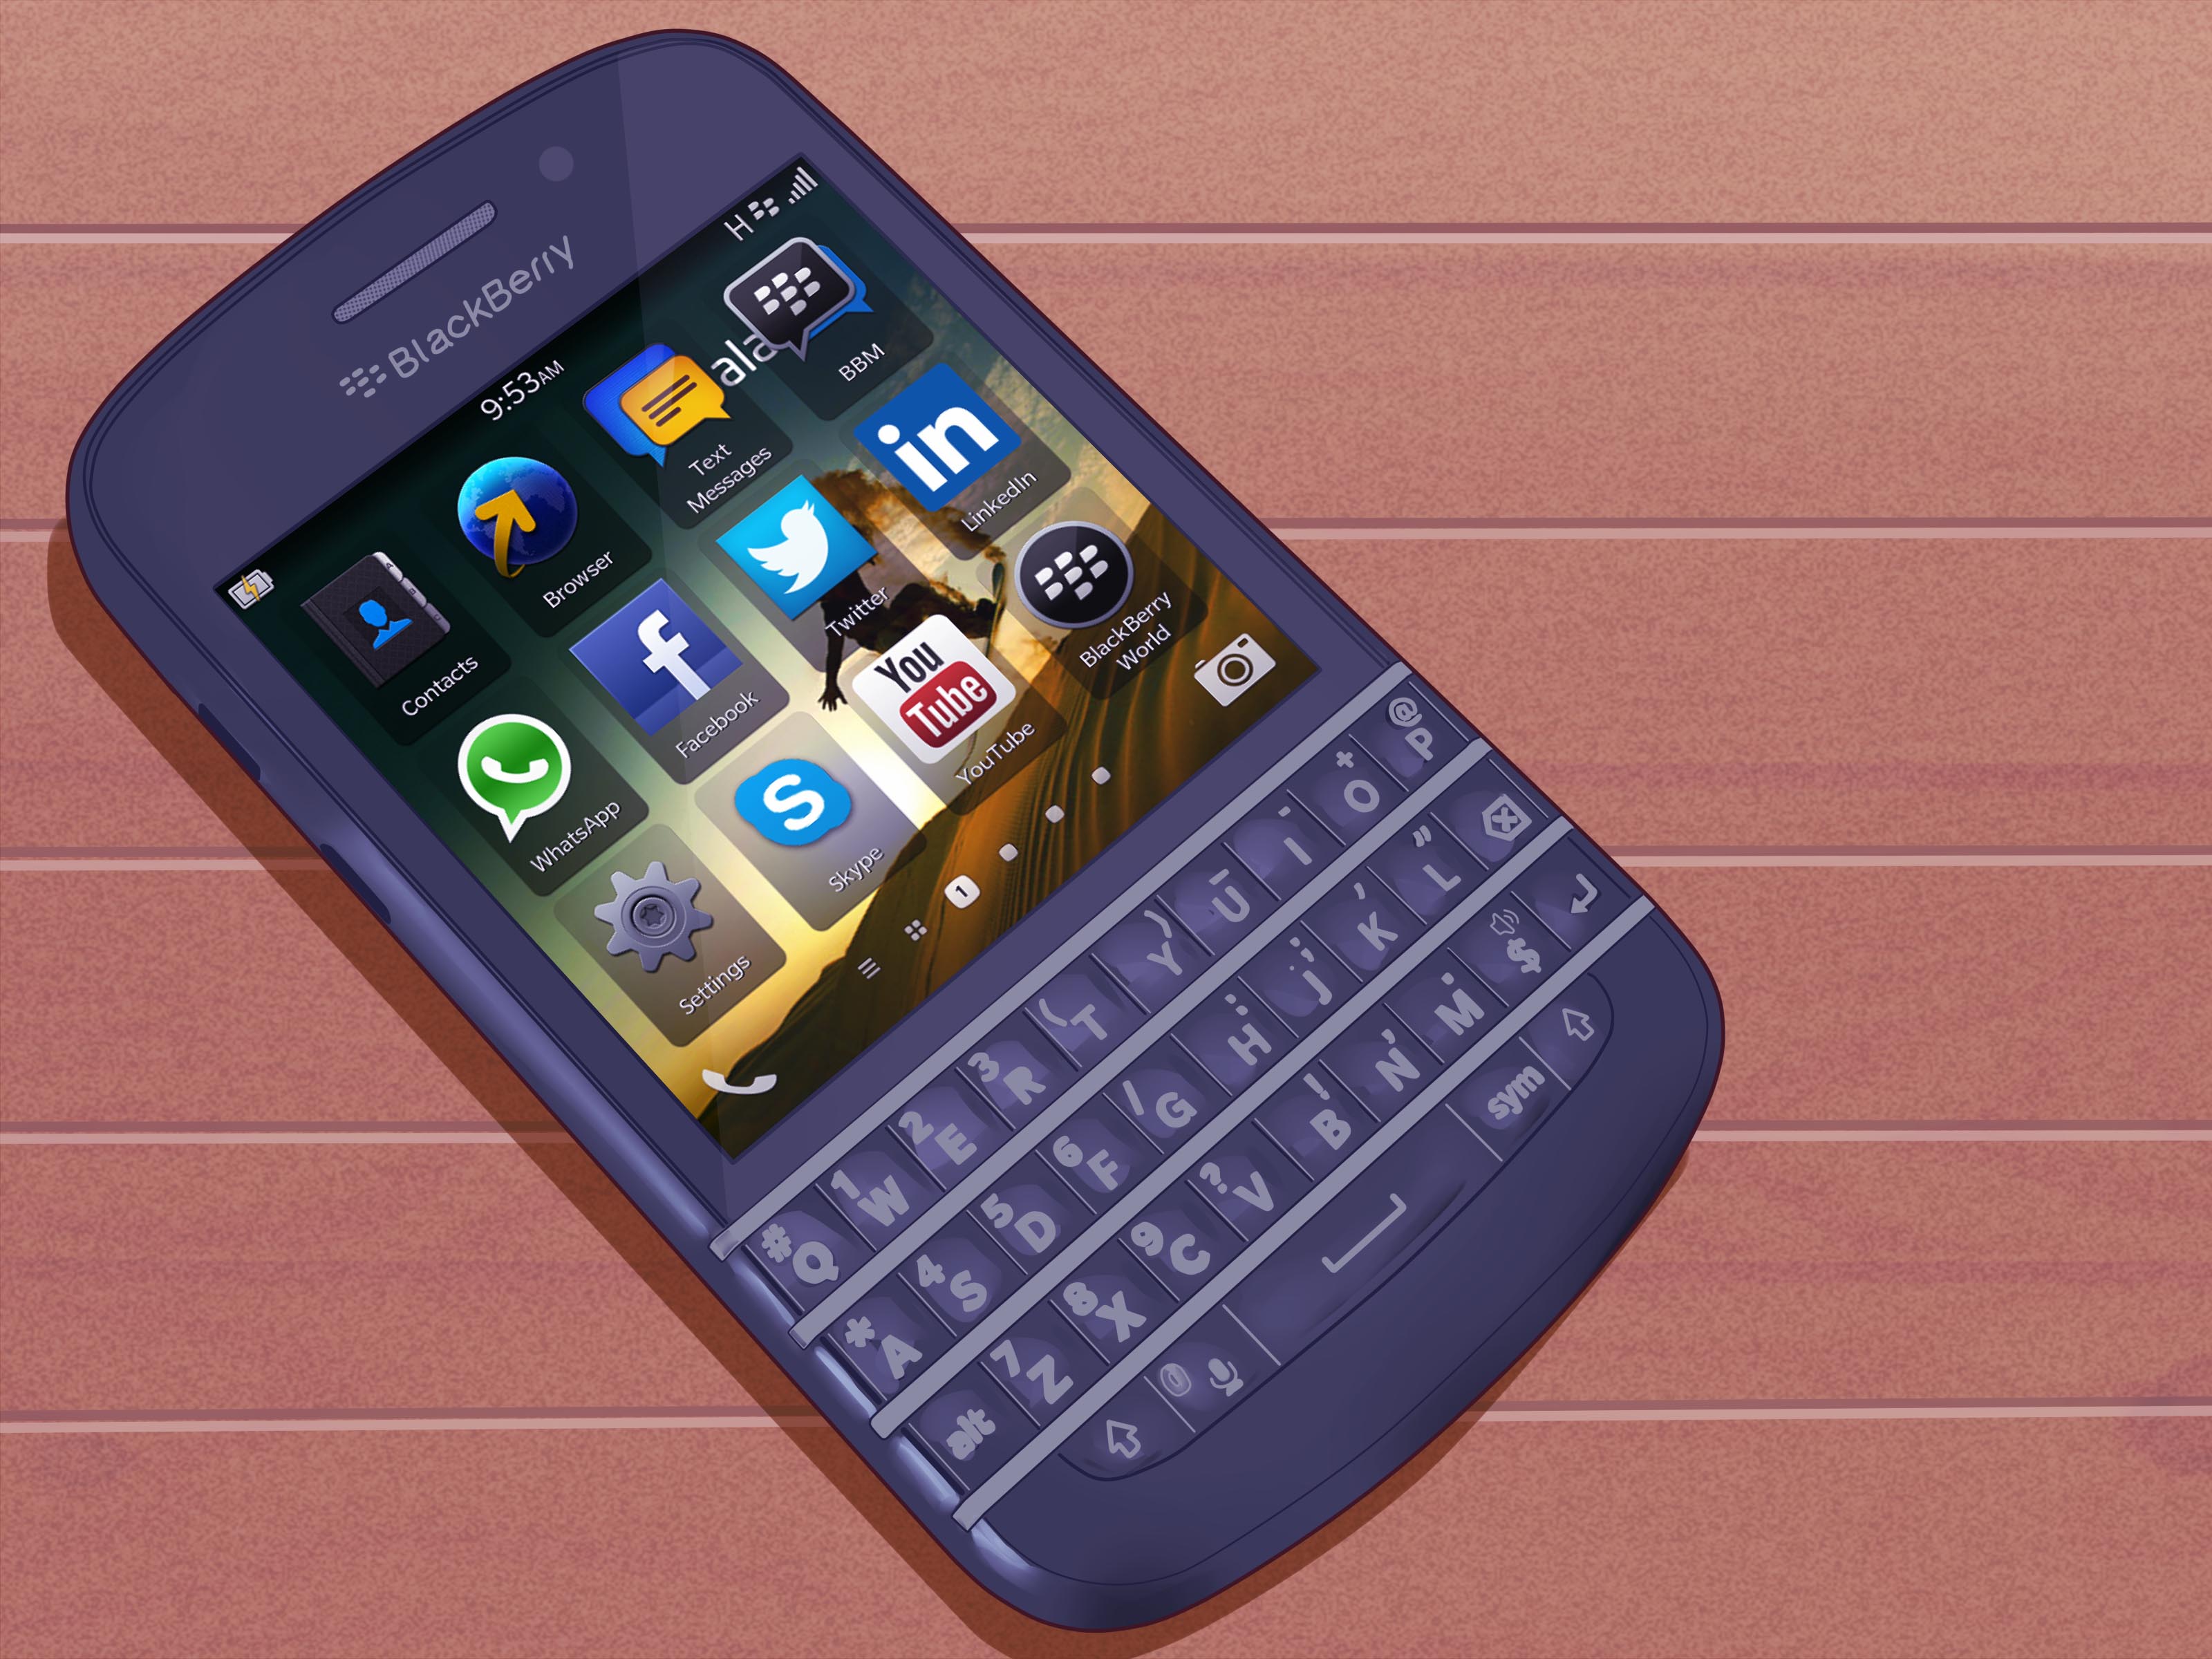 How To Reset A Blackberry - Mtn Kamunye Smart Phone , HD Wallpaper & Backgrounds